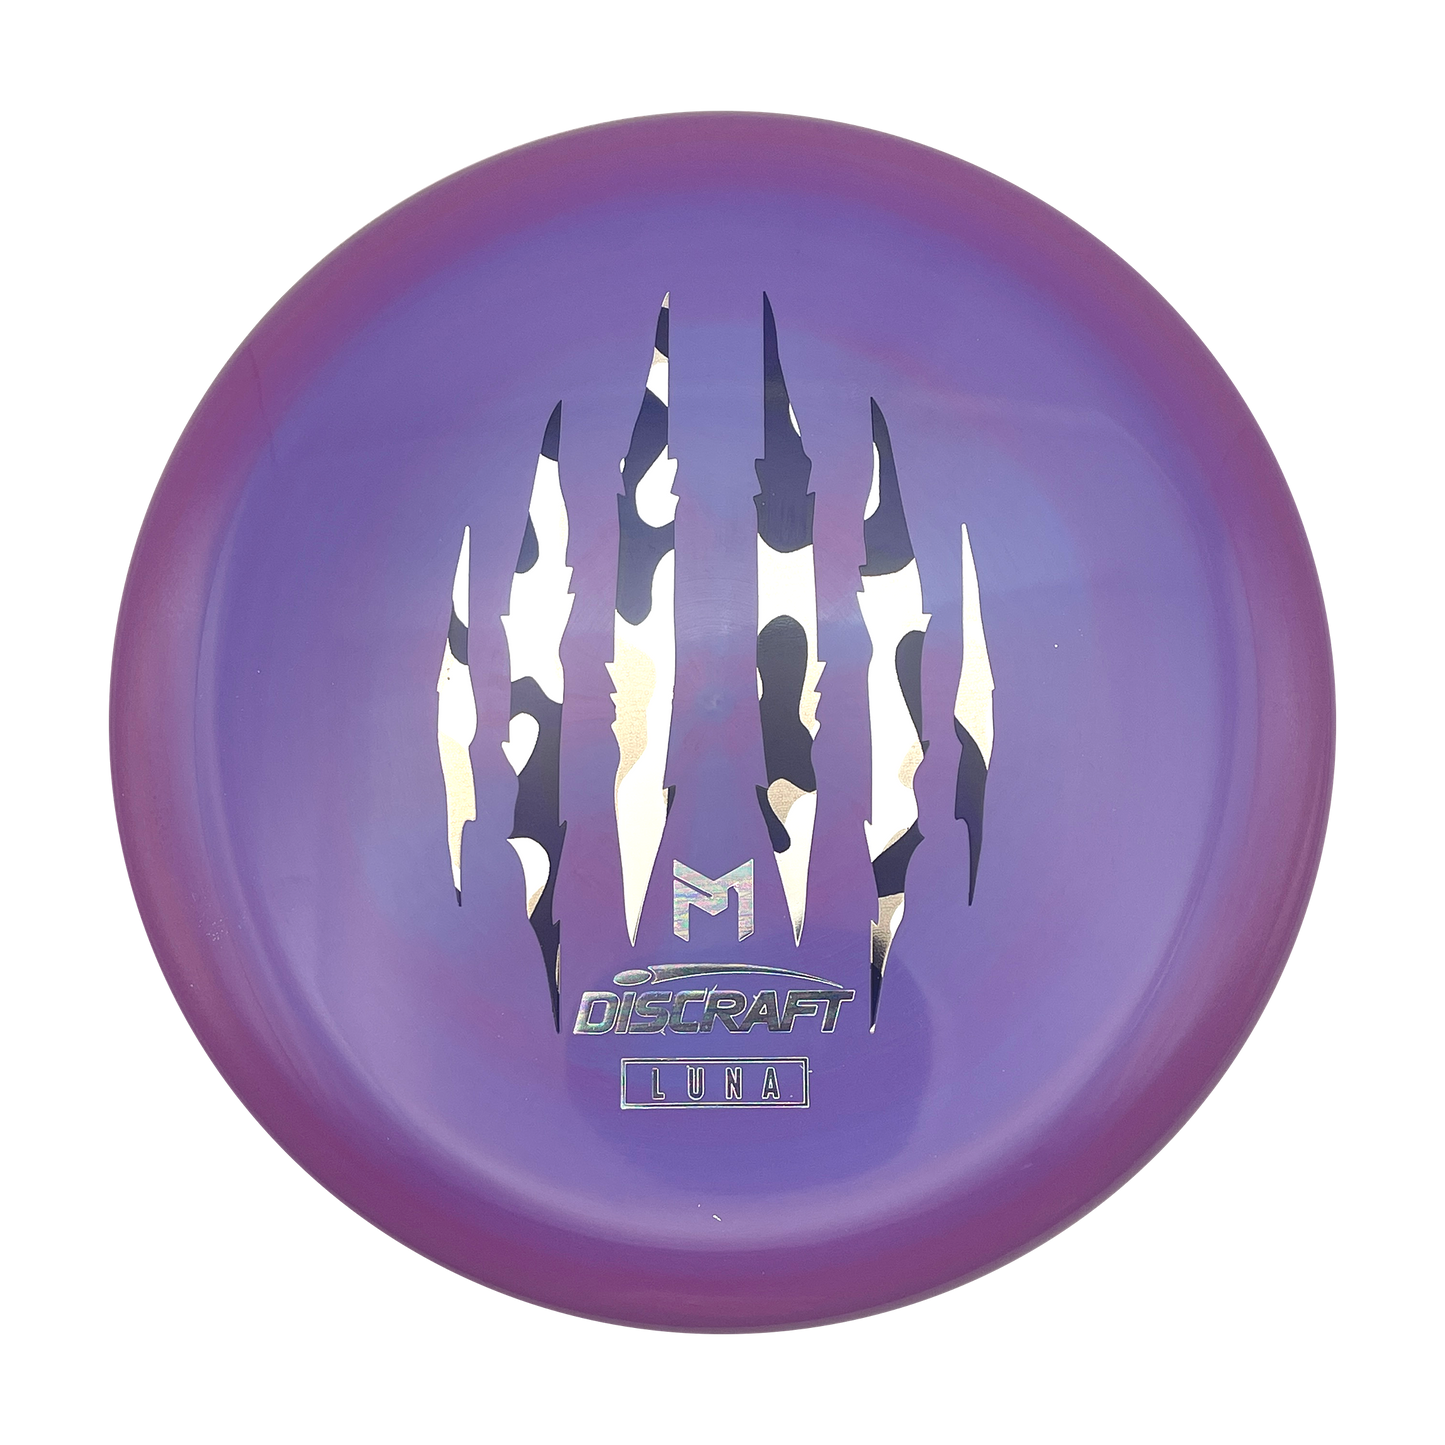 Discraft Luna - 6x Paul McBeth - ESP - Swirly Purple